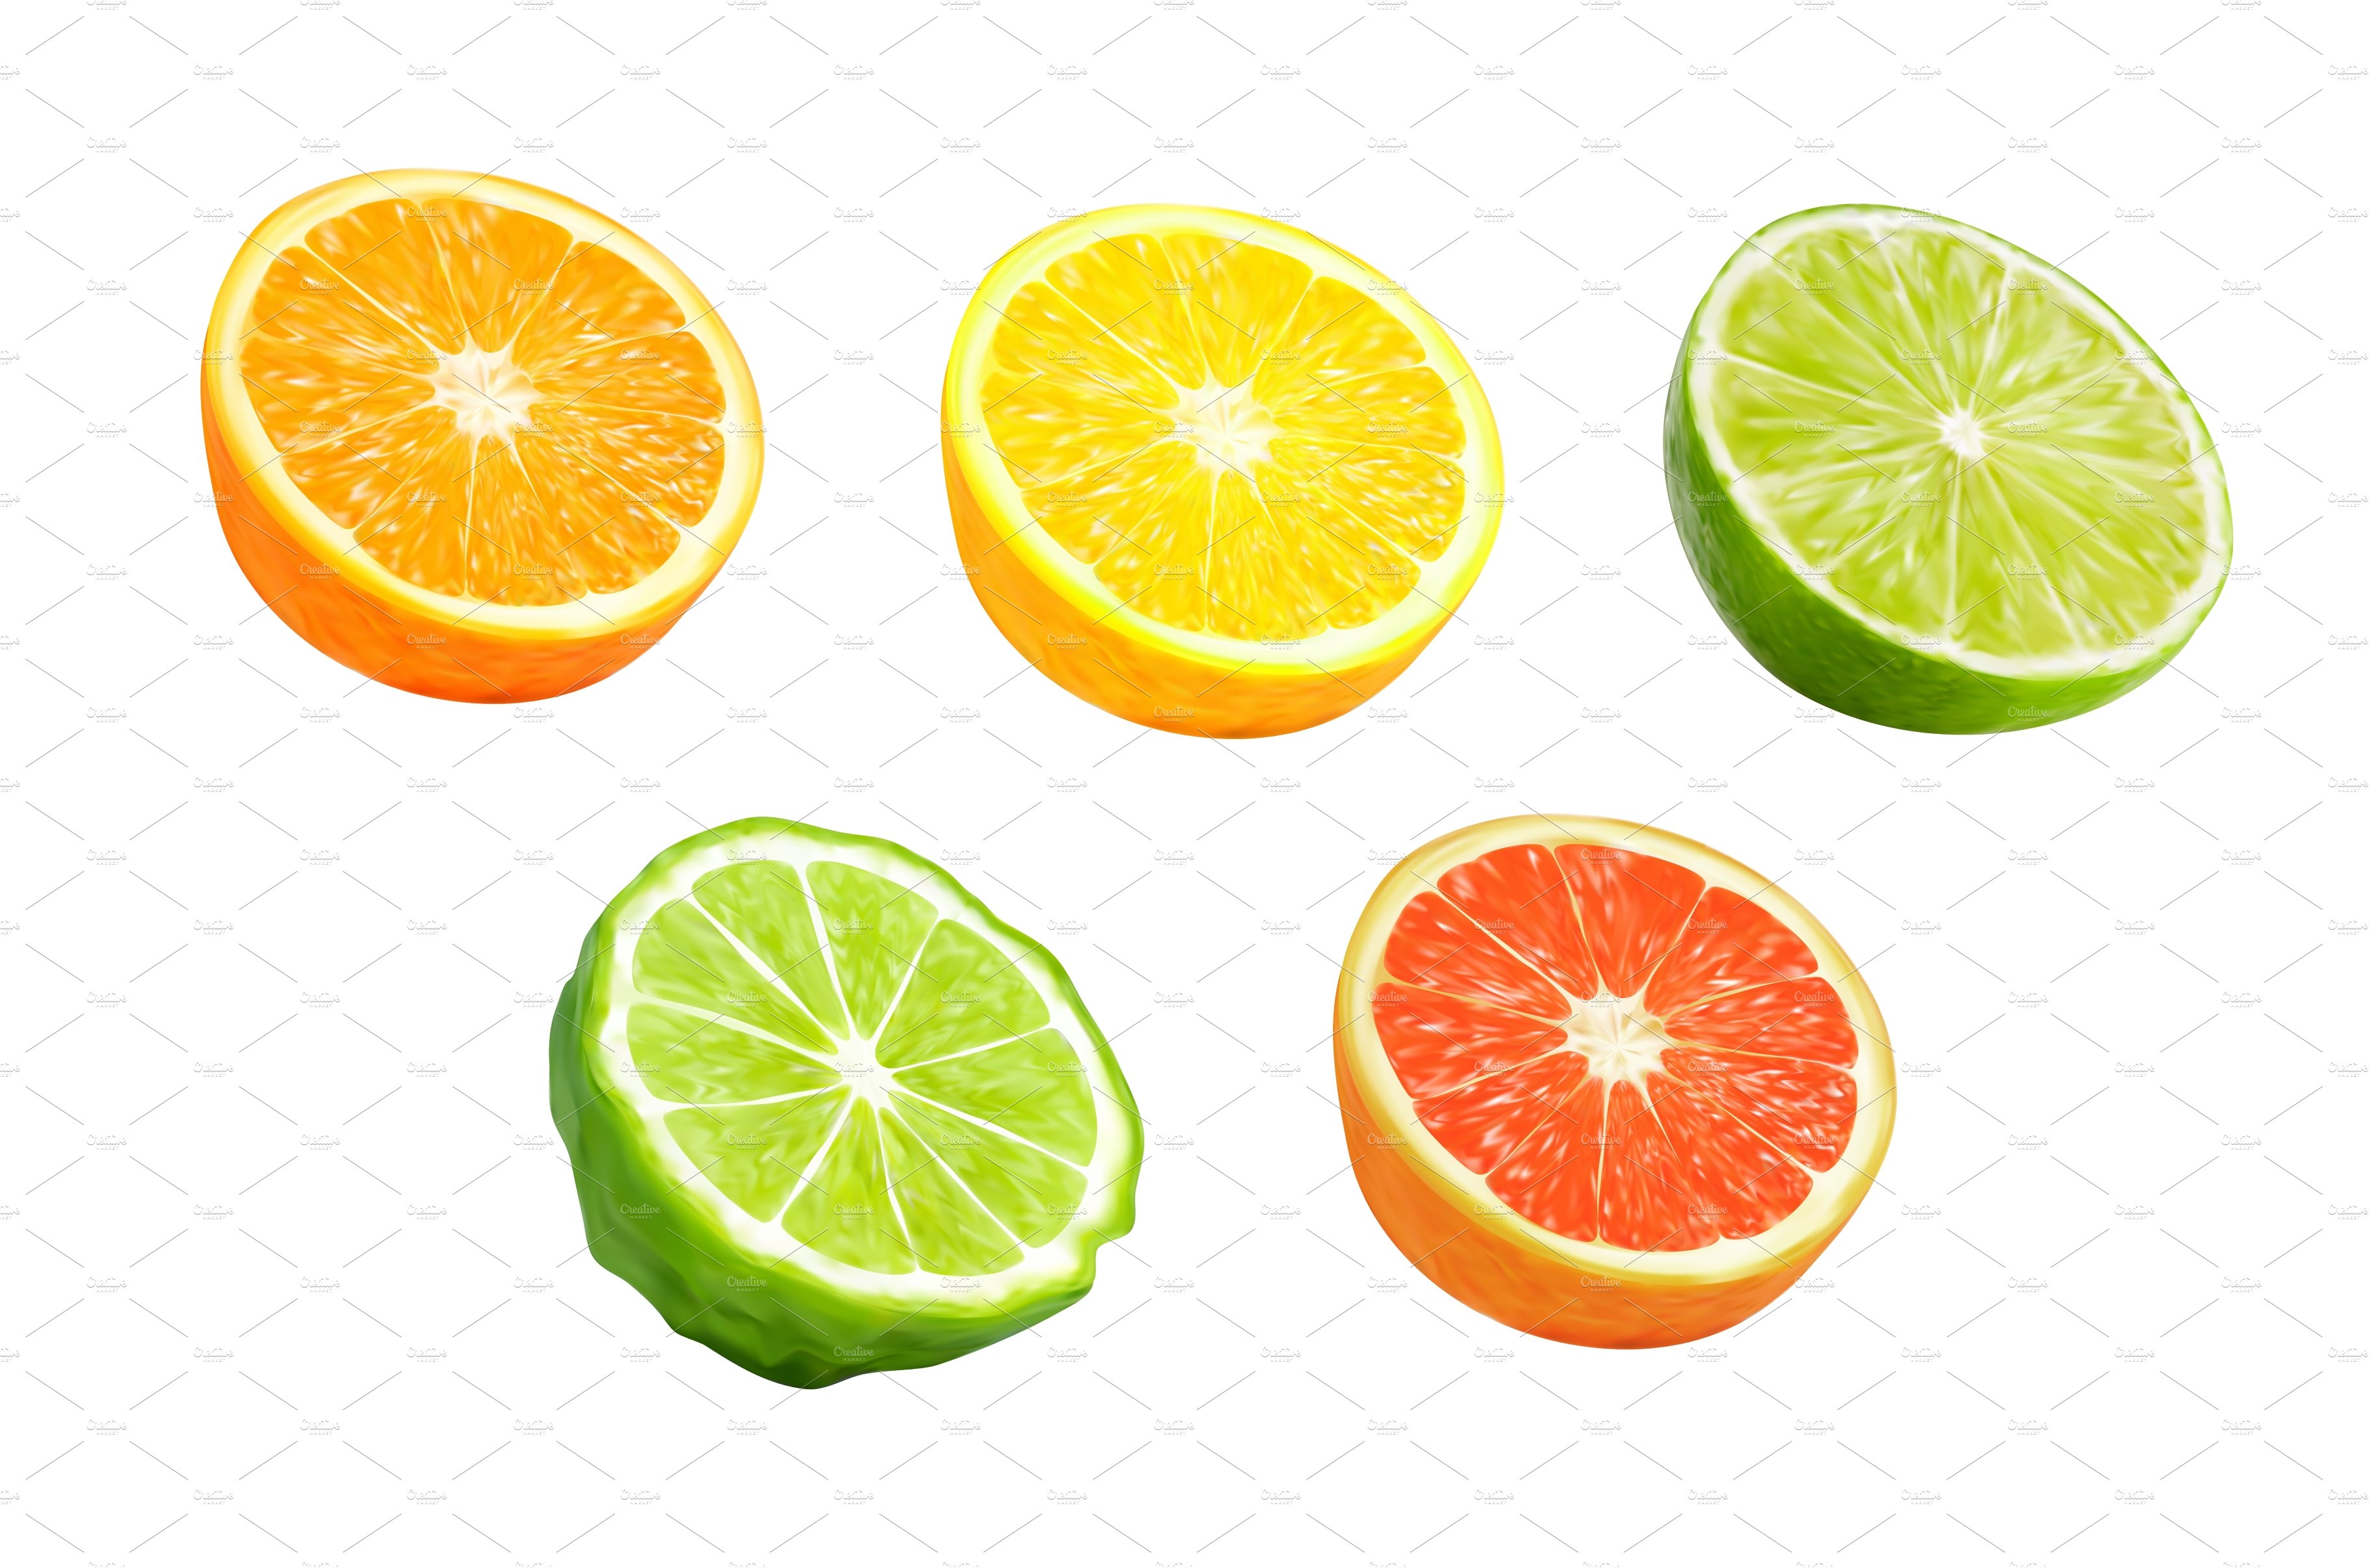 Lemon, orange, grapefruit cover image.